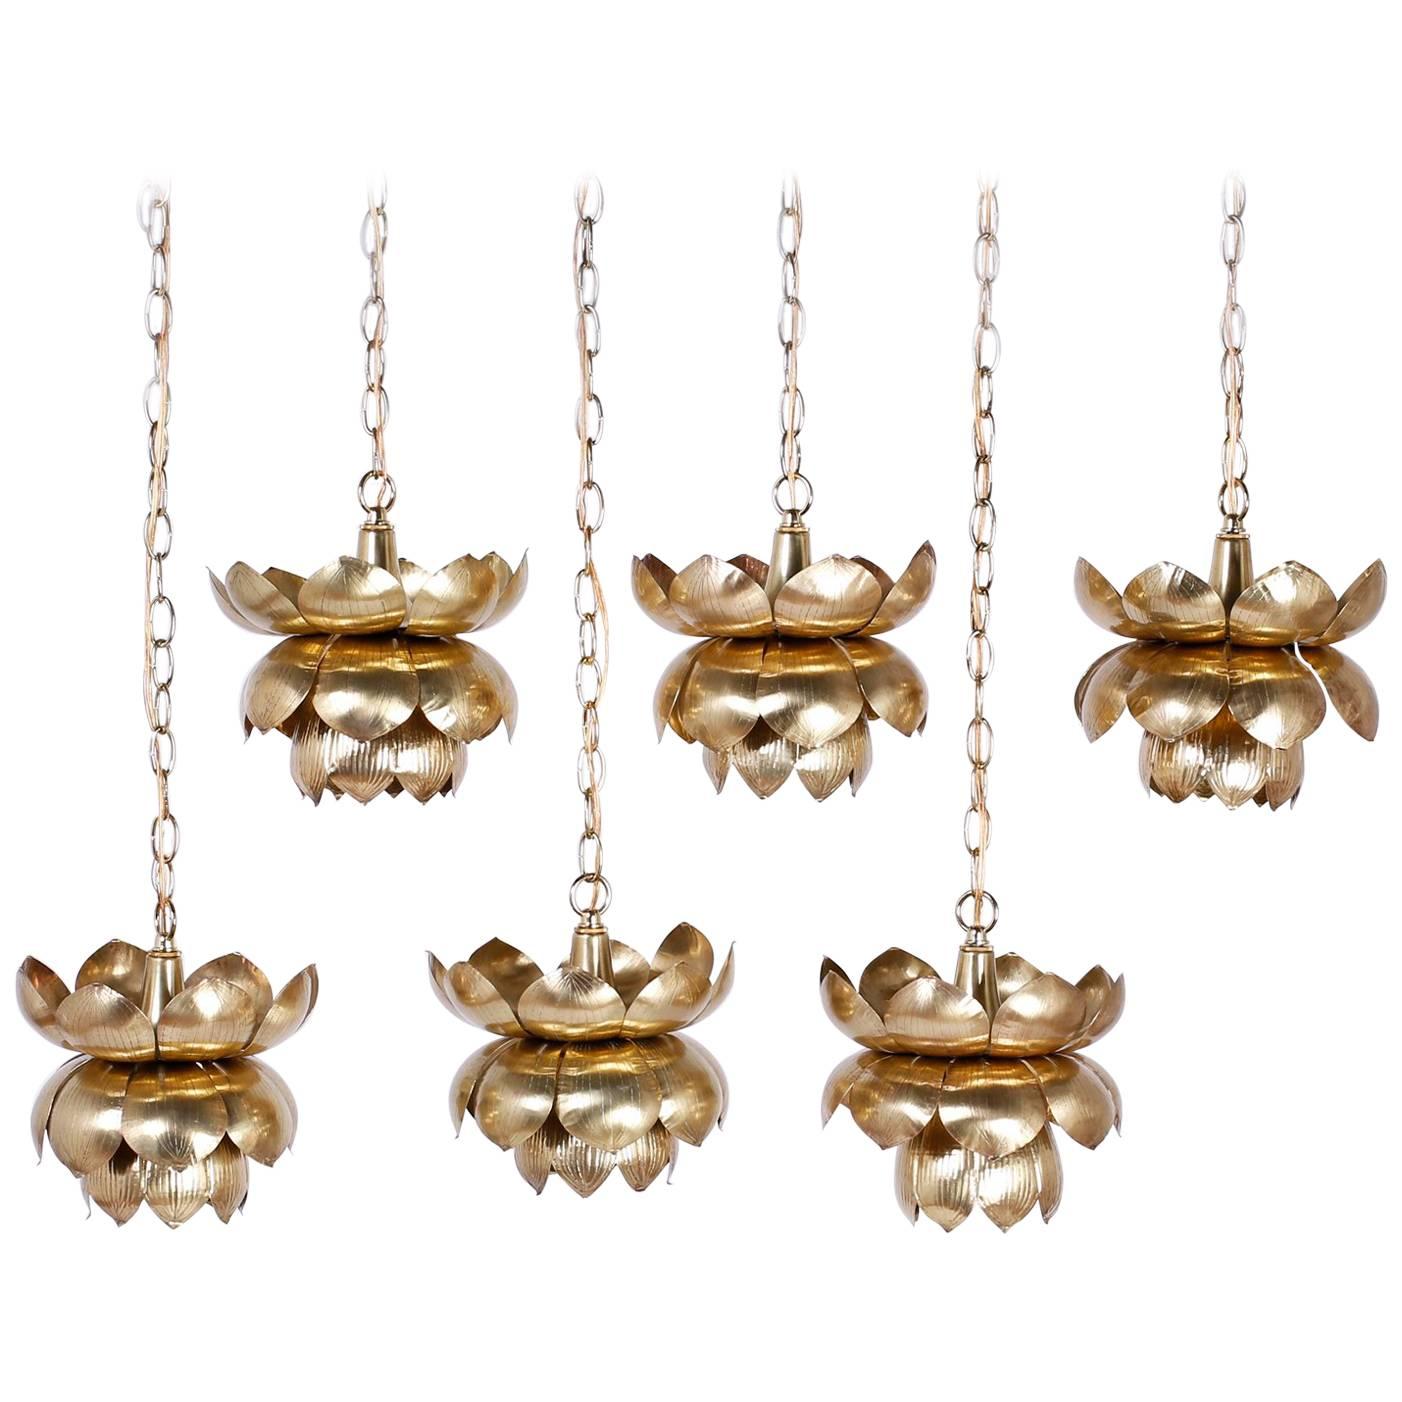 Group of Six Brass Lotus Light Pendants or Chandeliers